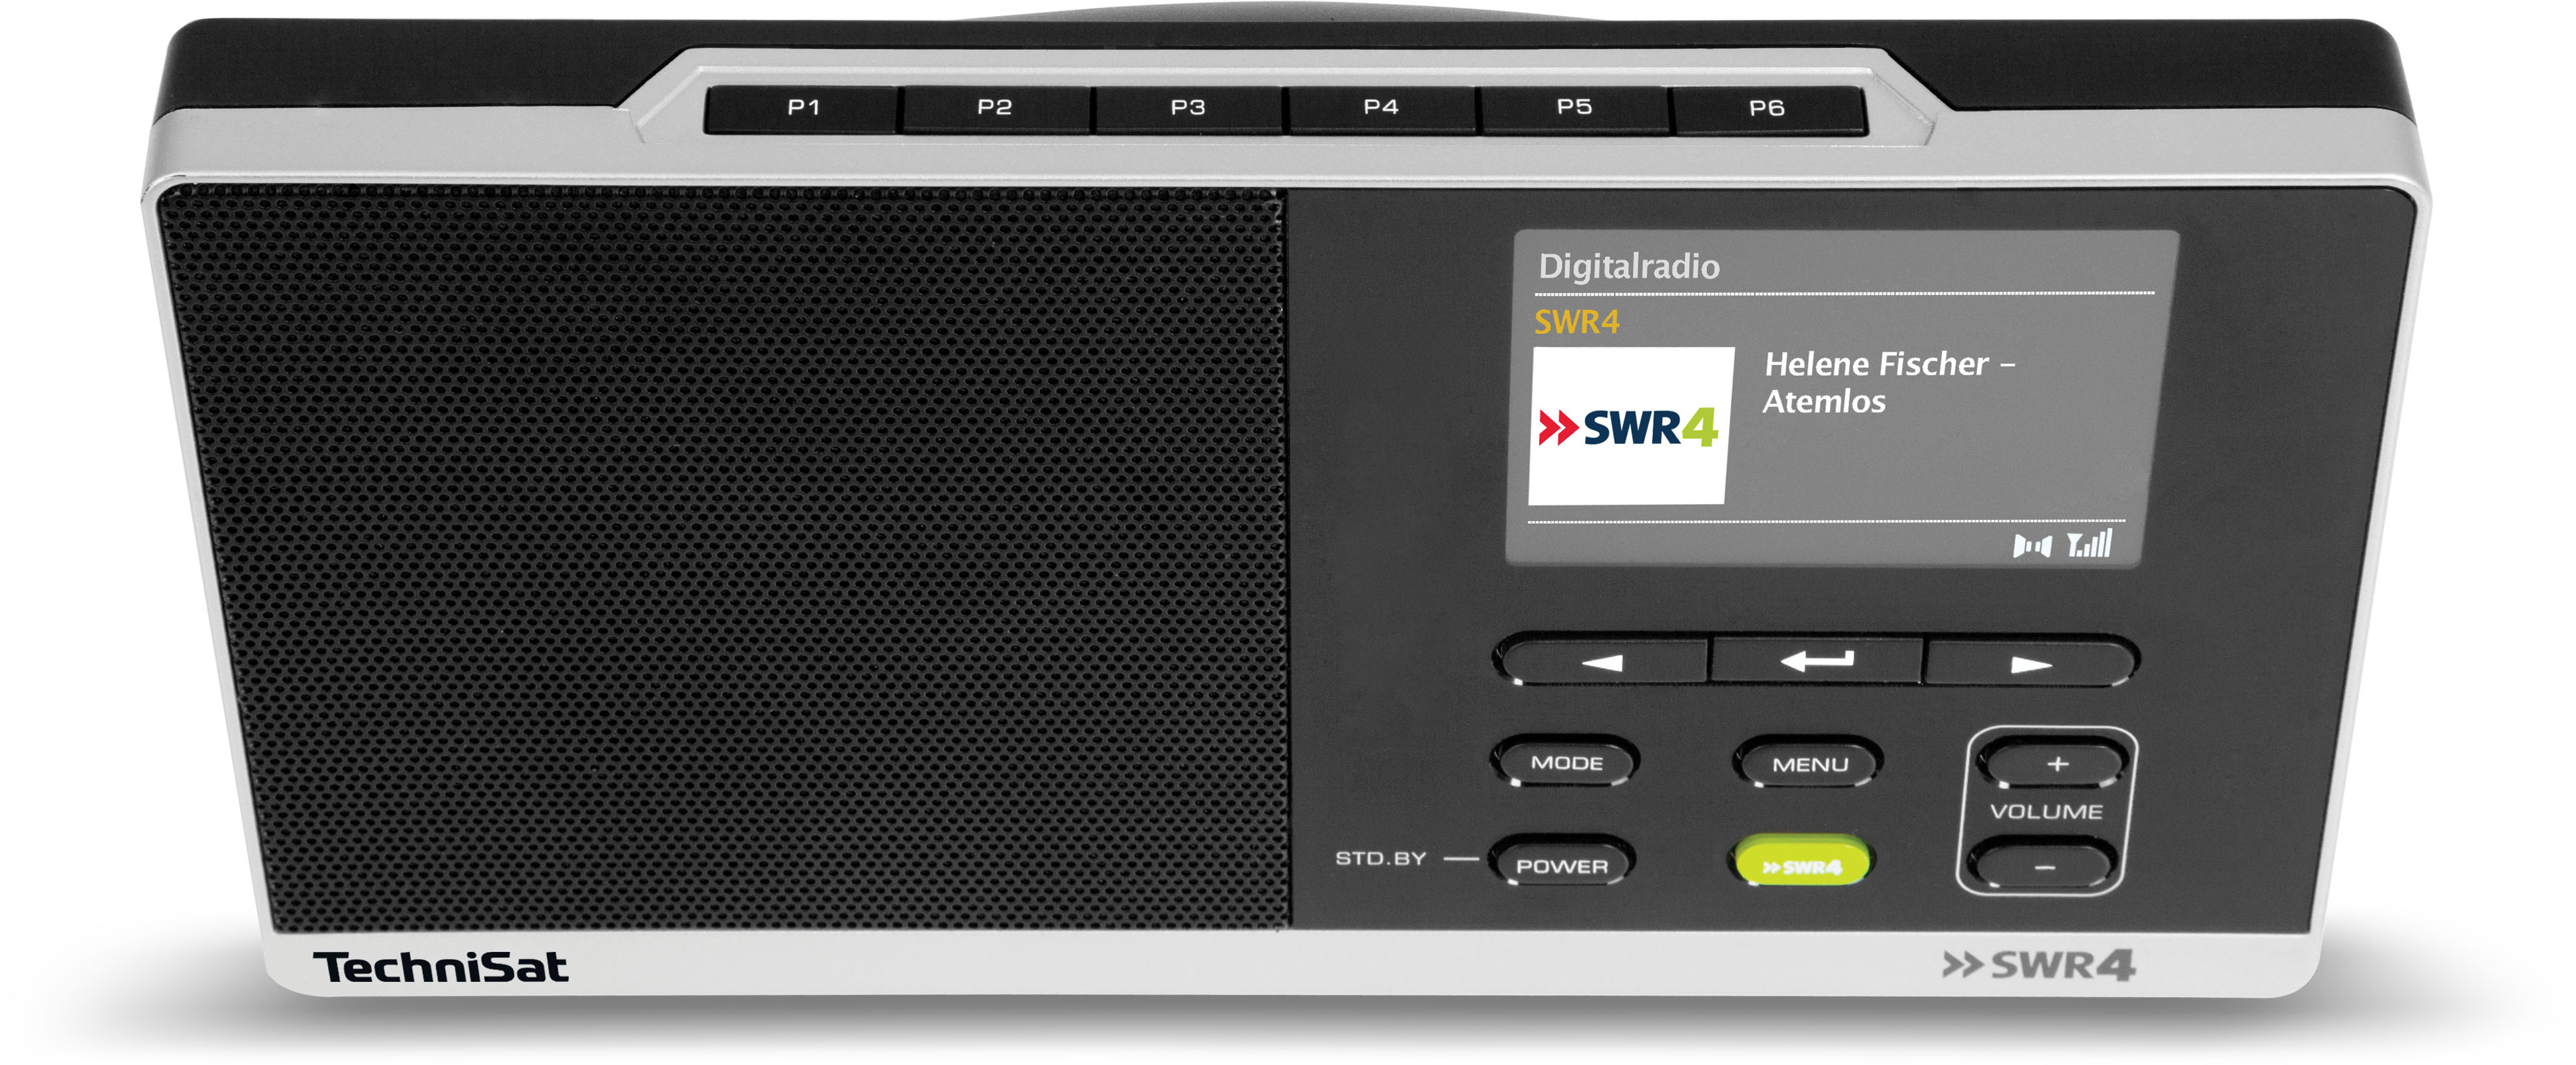 Schwarz DAB, Radio, FM, digital, EDITION TECHNISAT DAB+, 215 SWR4 DIGITRADIO